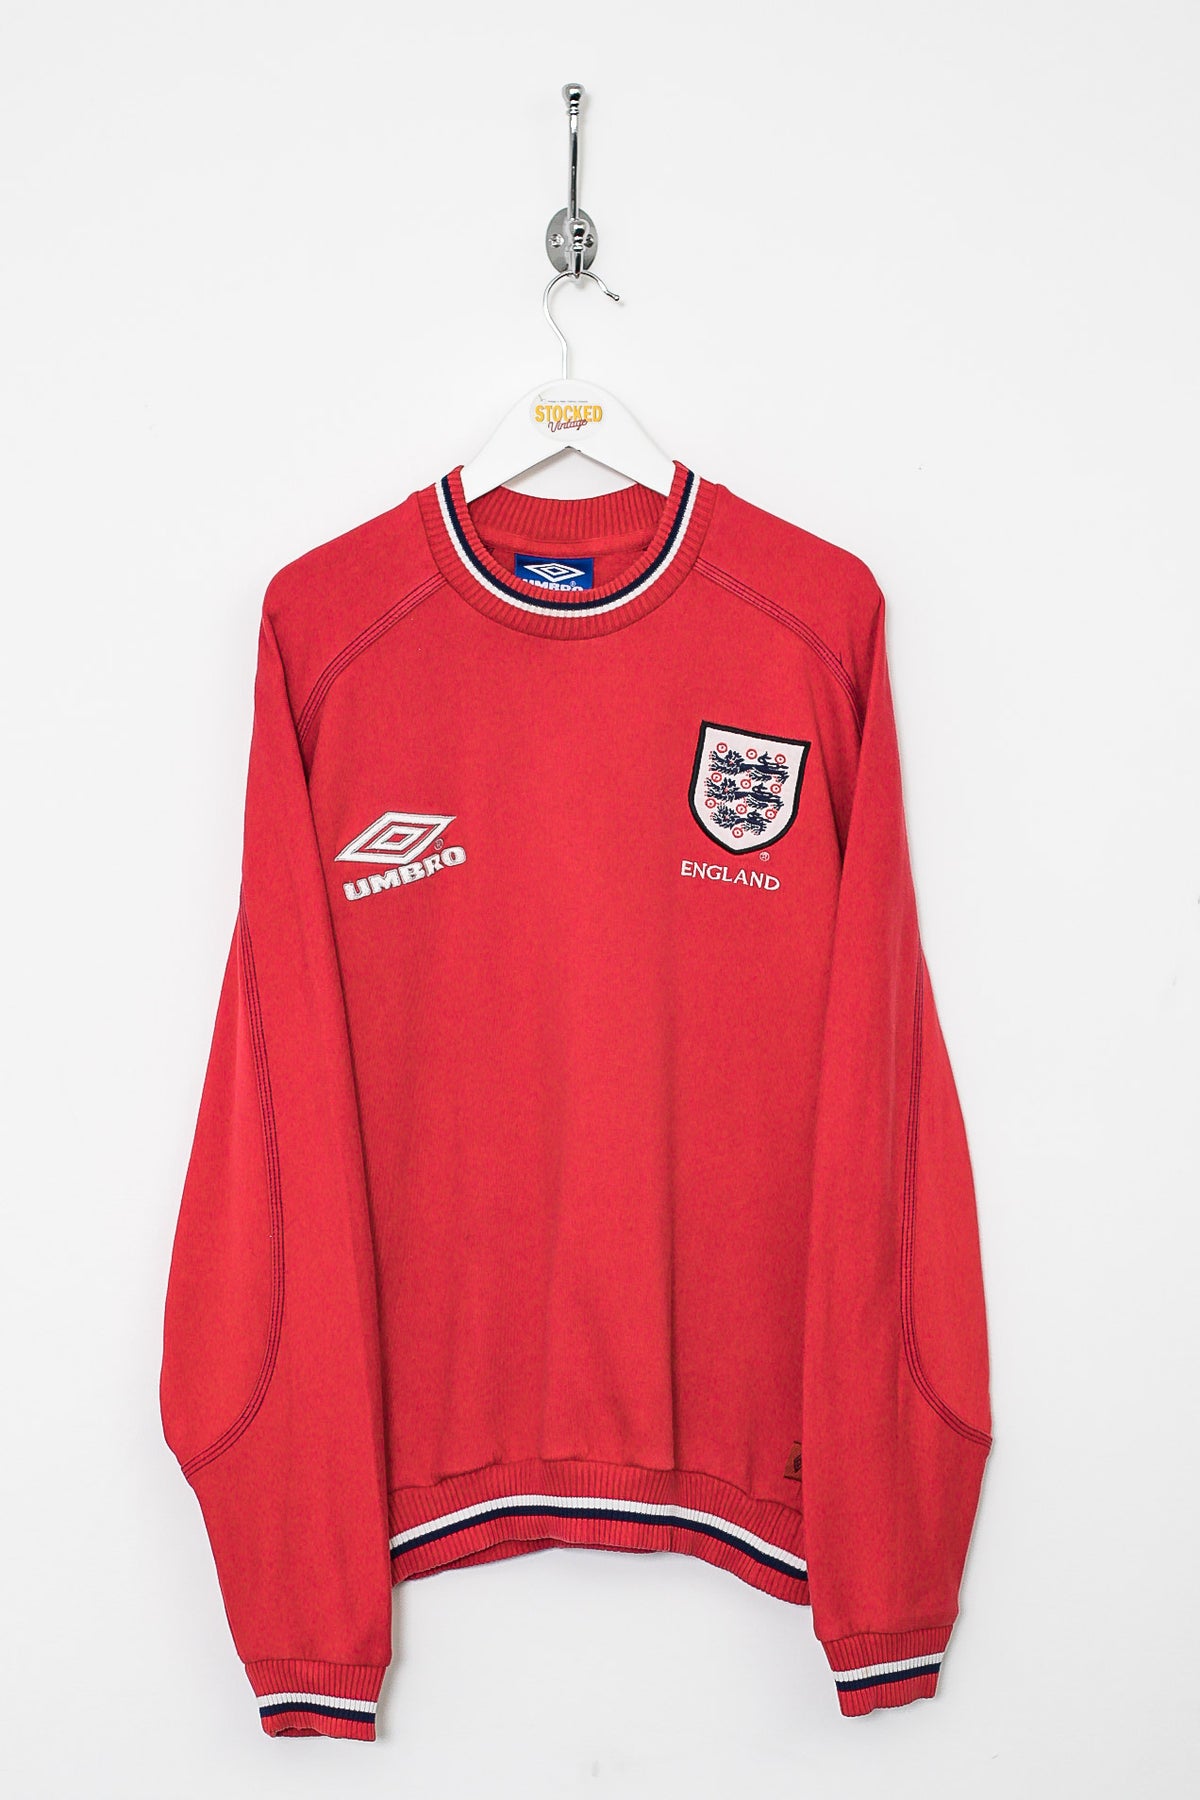 90s Umbro England Training Sweatshirt (M)